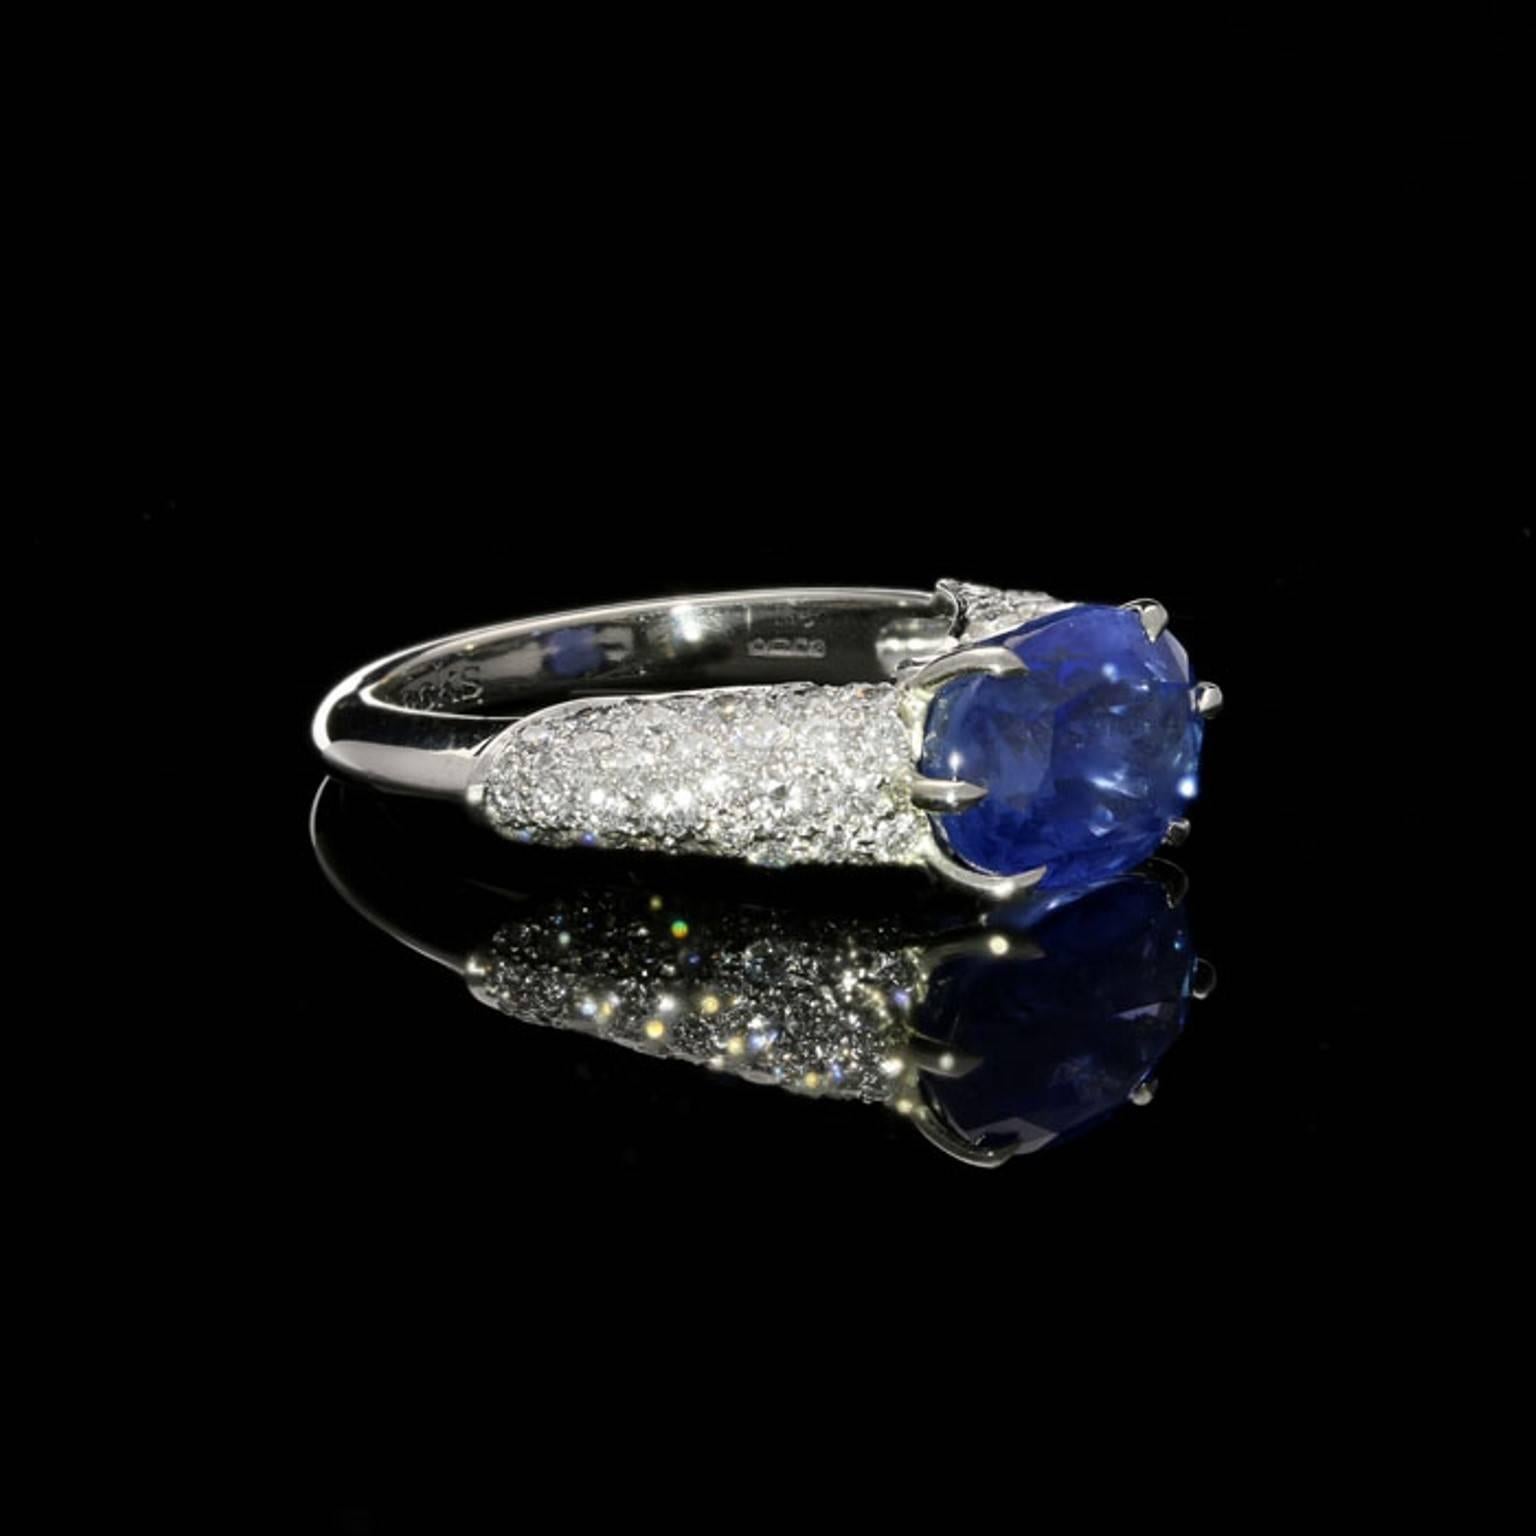 Contemporary 4.76 Carat Sapphire Ring with Pavé Diamond-Set Raised Mount in Platinum